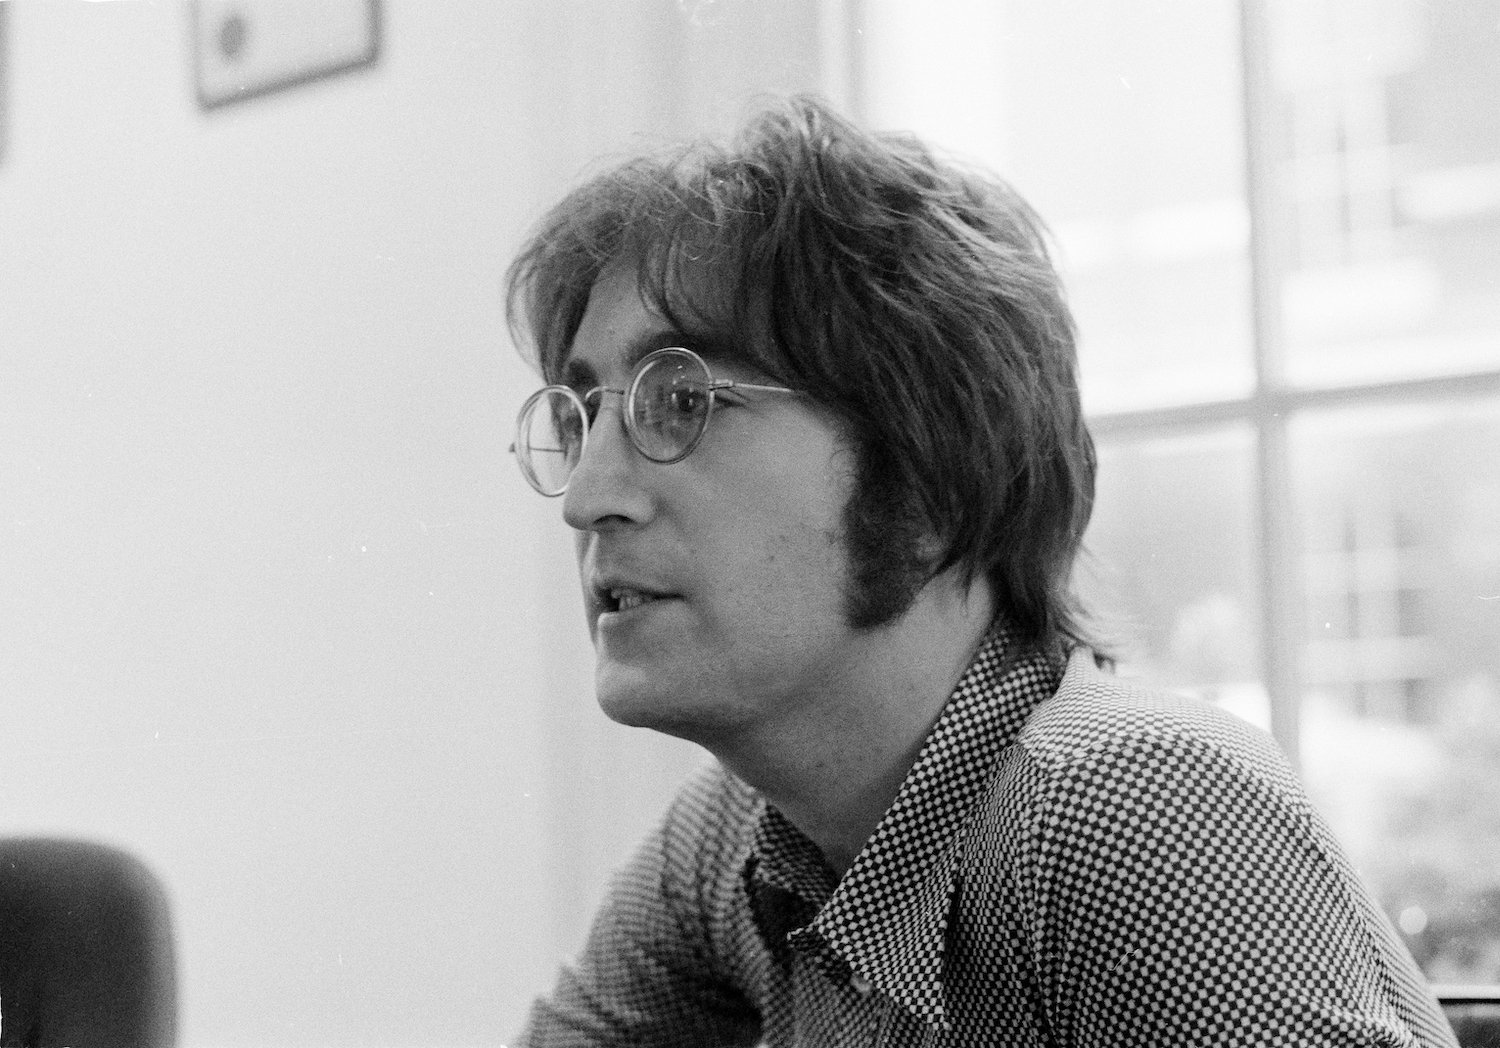 John Lennon being interviewed by journalist Steve Turner of Beat Instrumental magazine